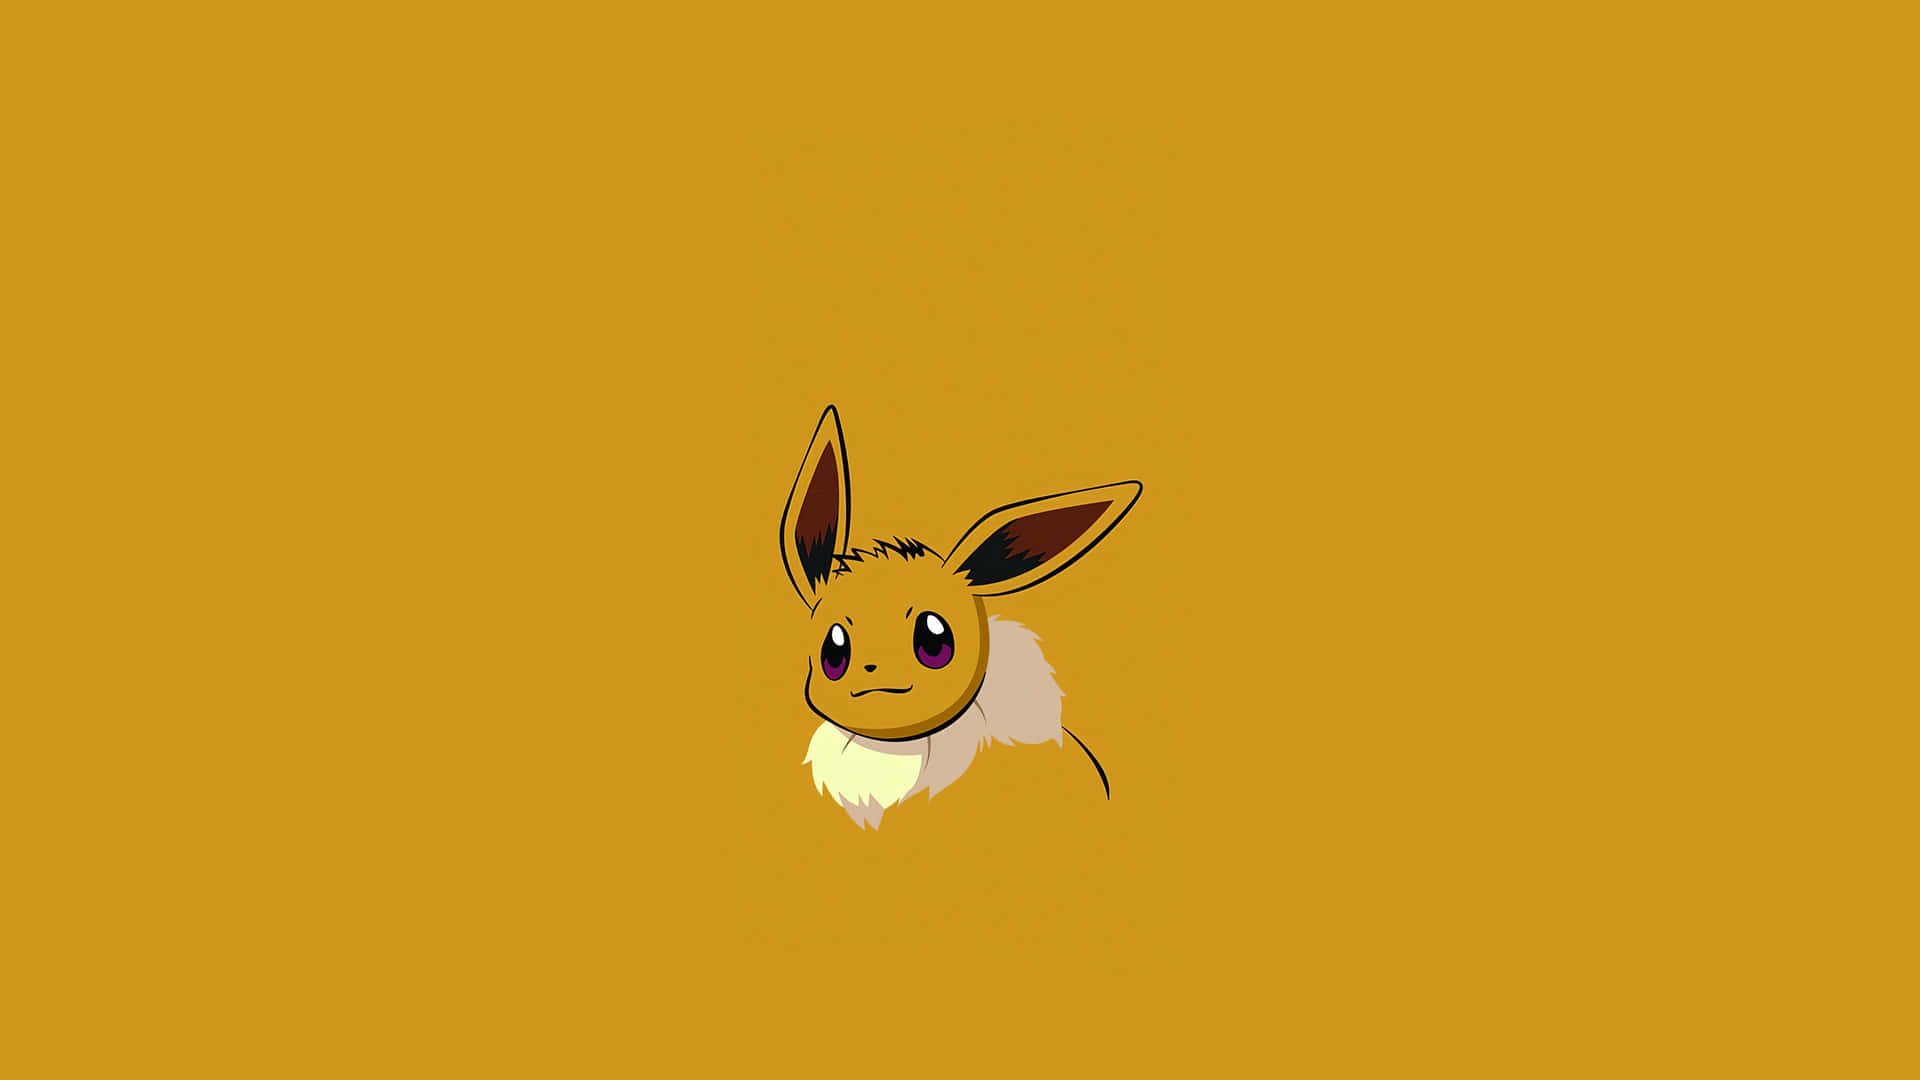 'Charmander - The Fire-Type Pokémon' Wallpaper